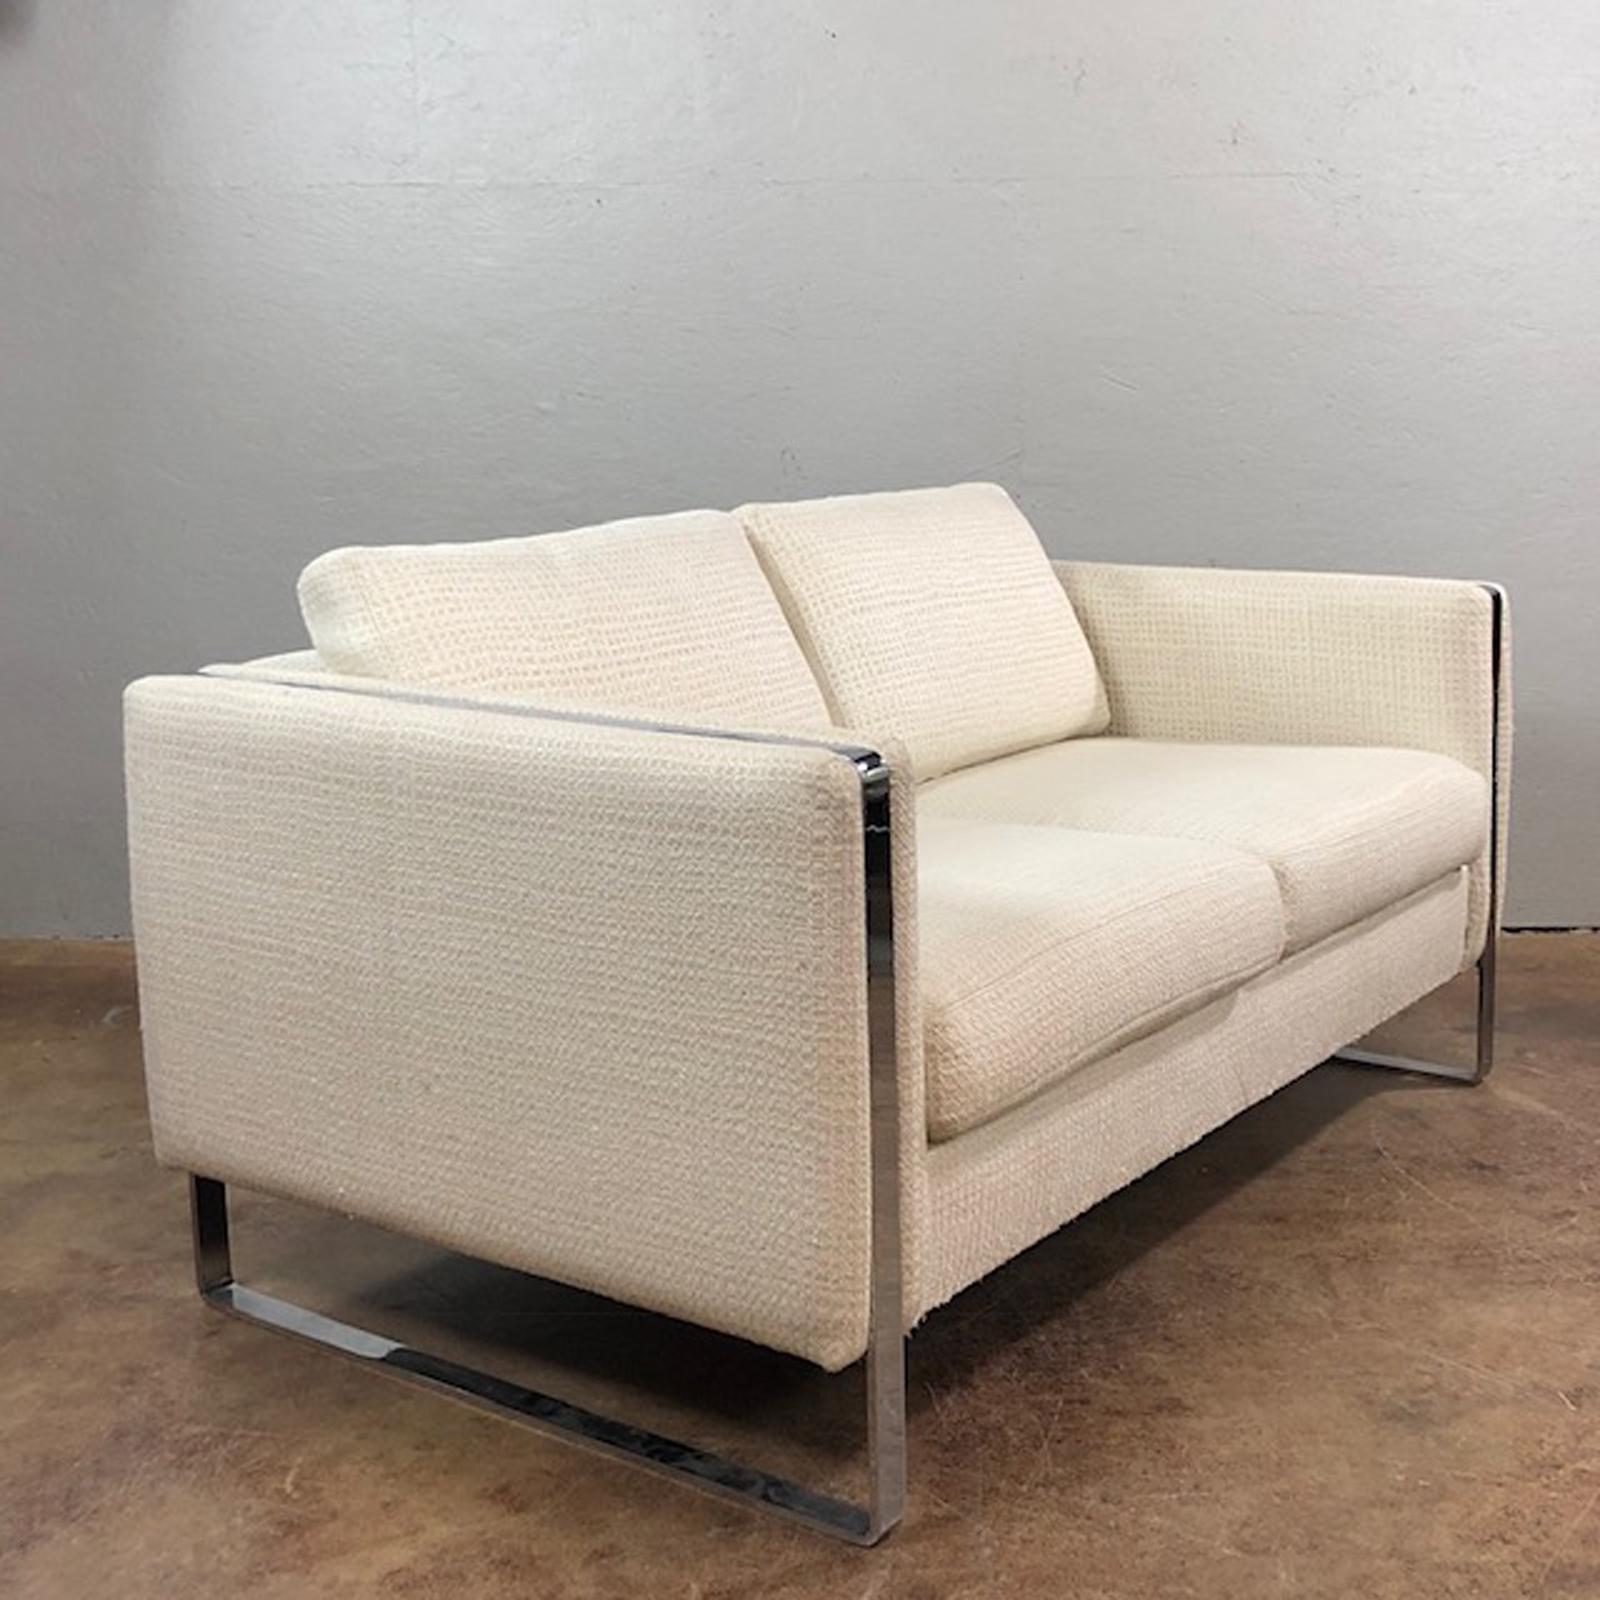 Milo Baughman sofa loveseat with chrome side frame wraps. Elegant. Unique, circa 1970s. Very good original condition. Cotton upholstery.